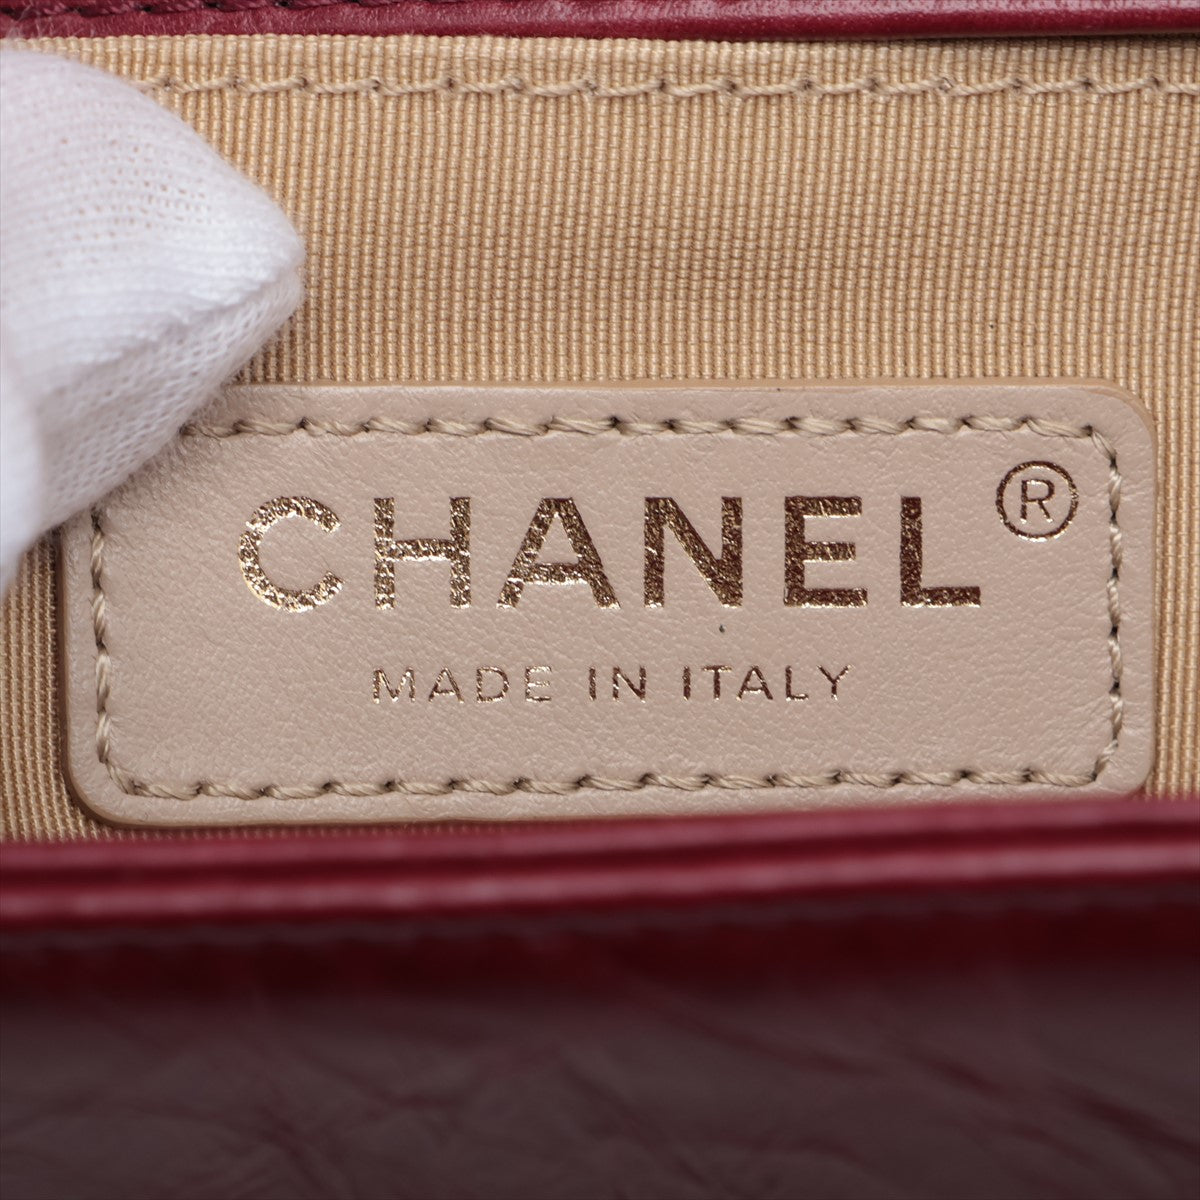 Chanel Mini Boy Chanel Leather Chain Shoulder Bag V Stick Bordeaux G